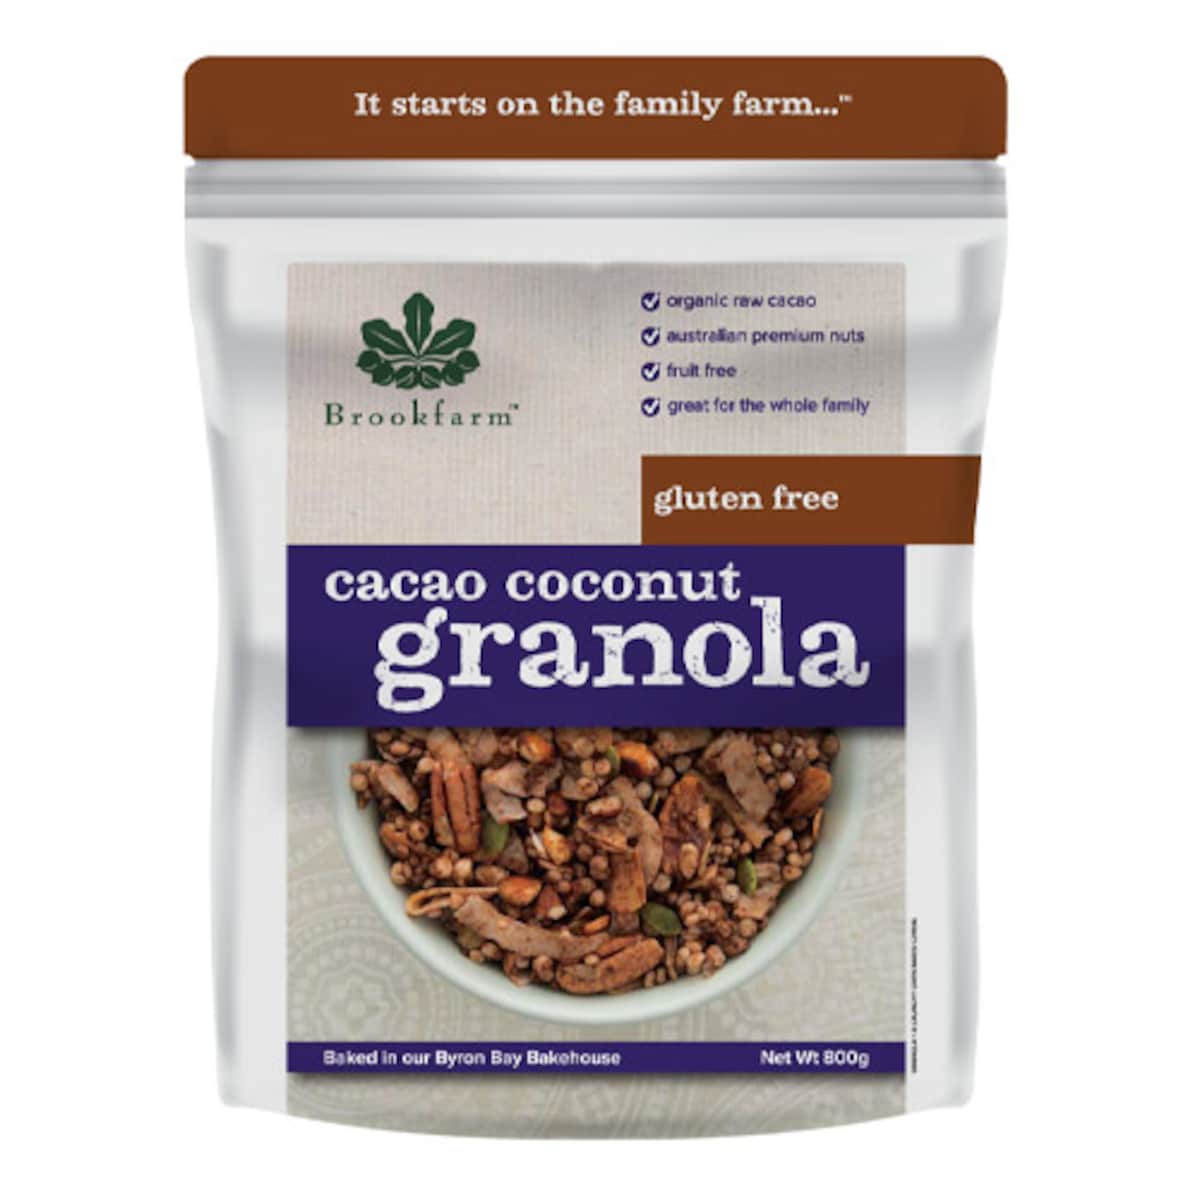 Brookfarm Gluten Free Granola Cacao Coconut 800G